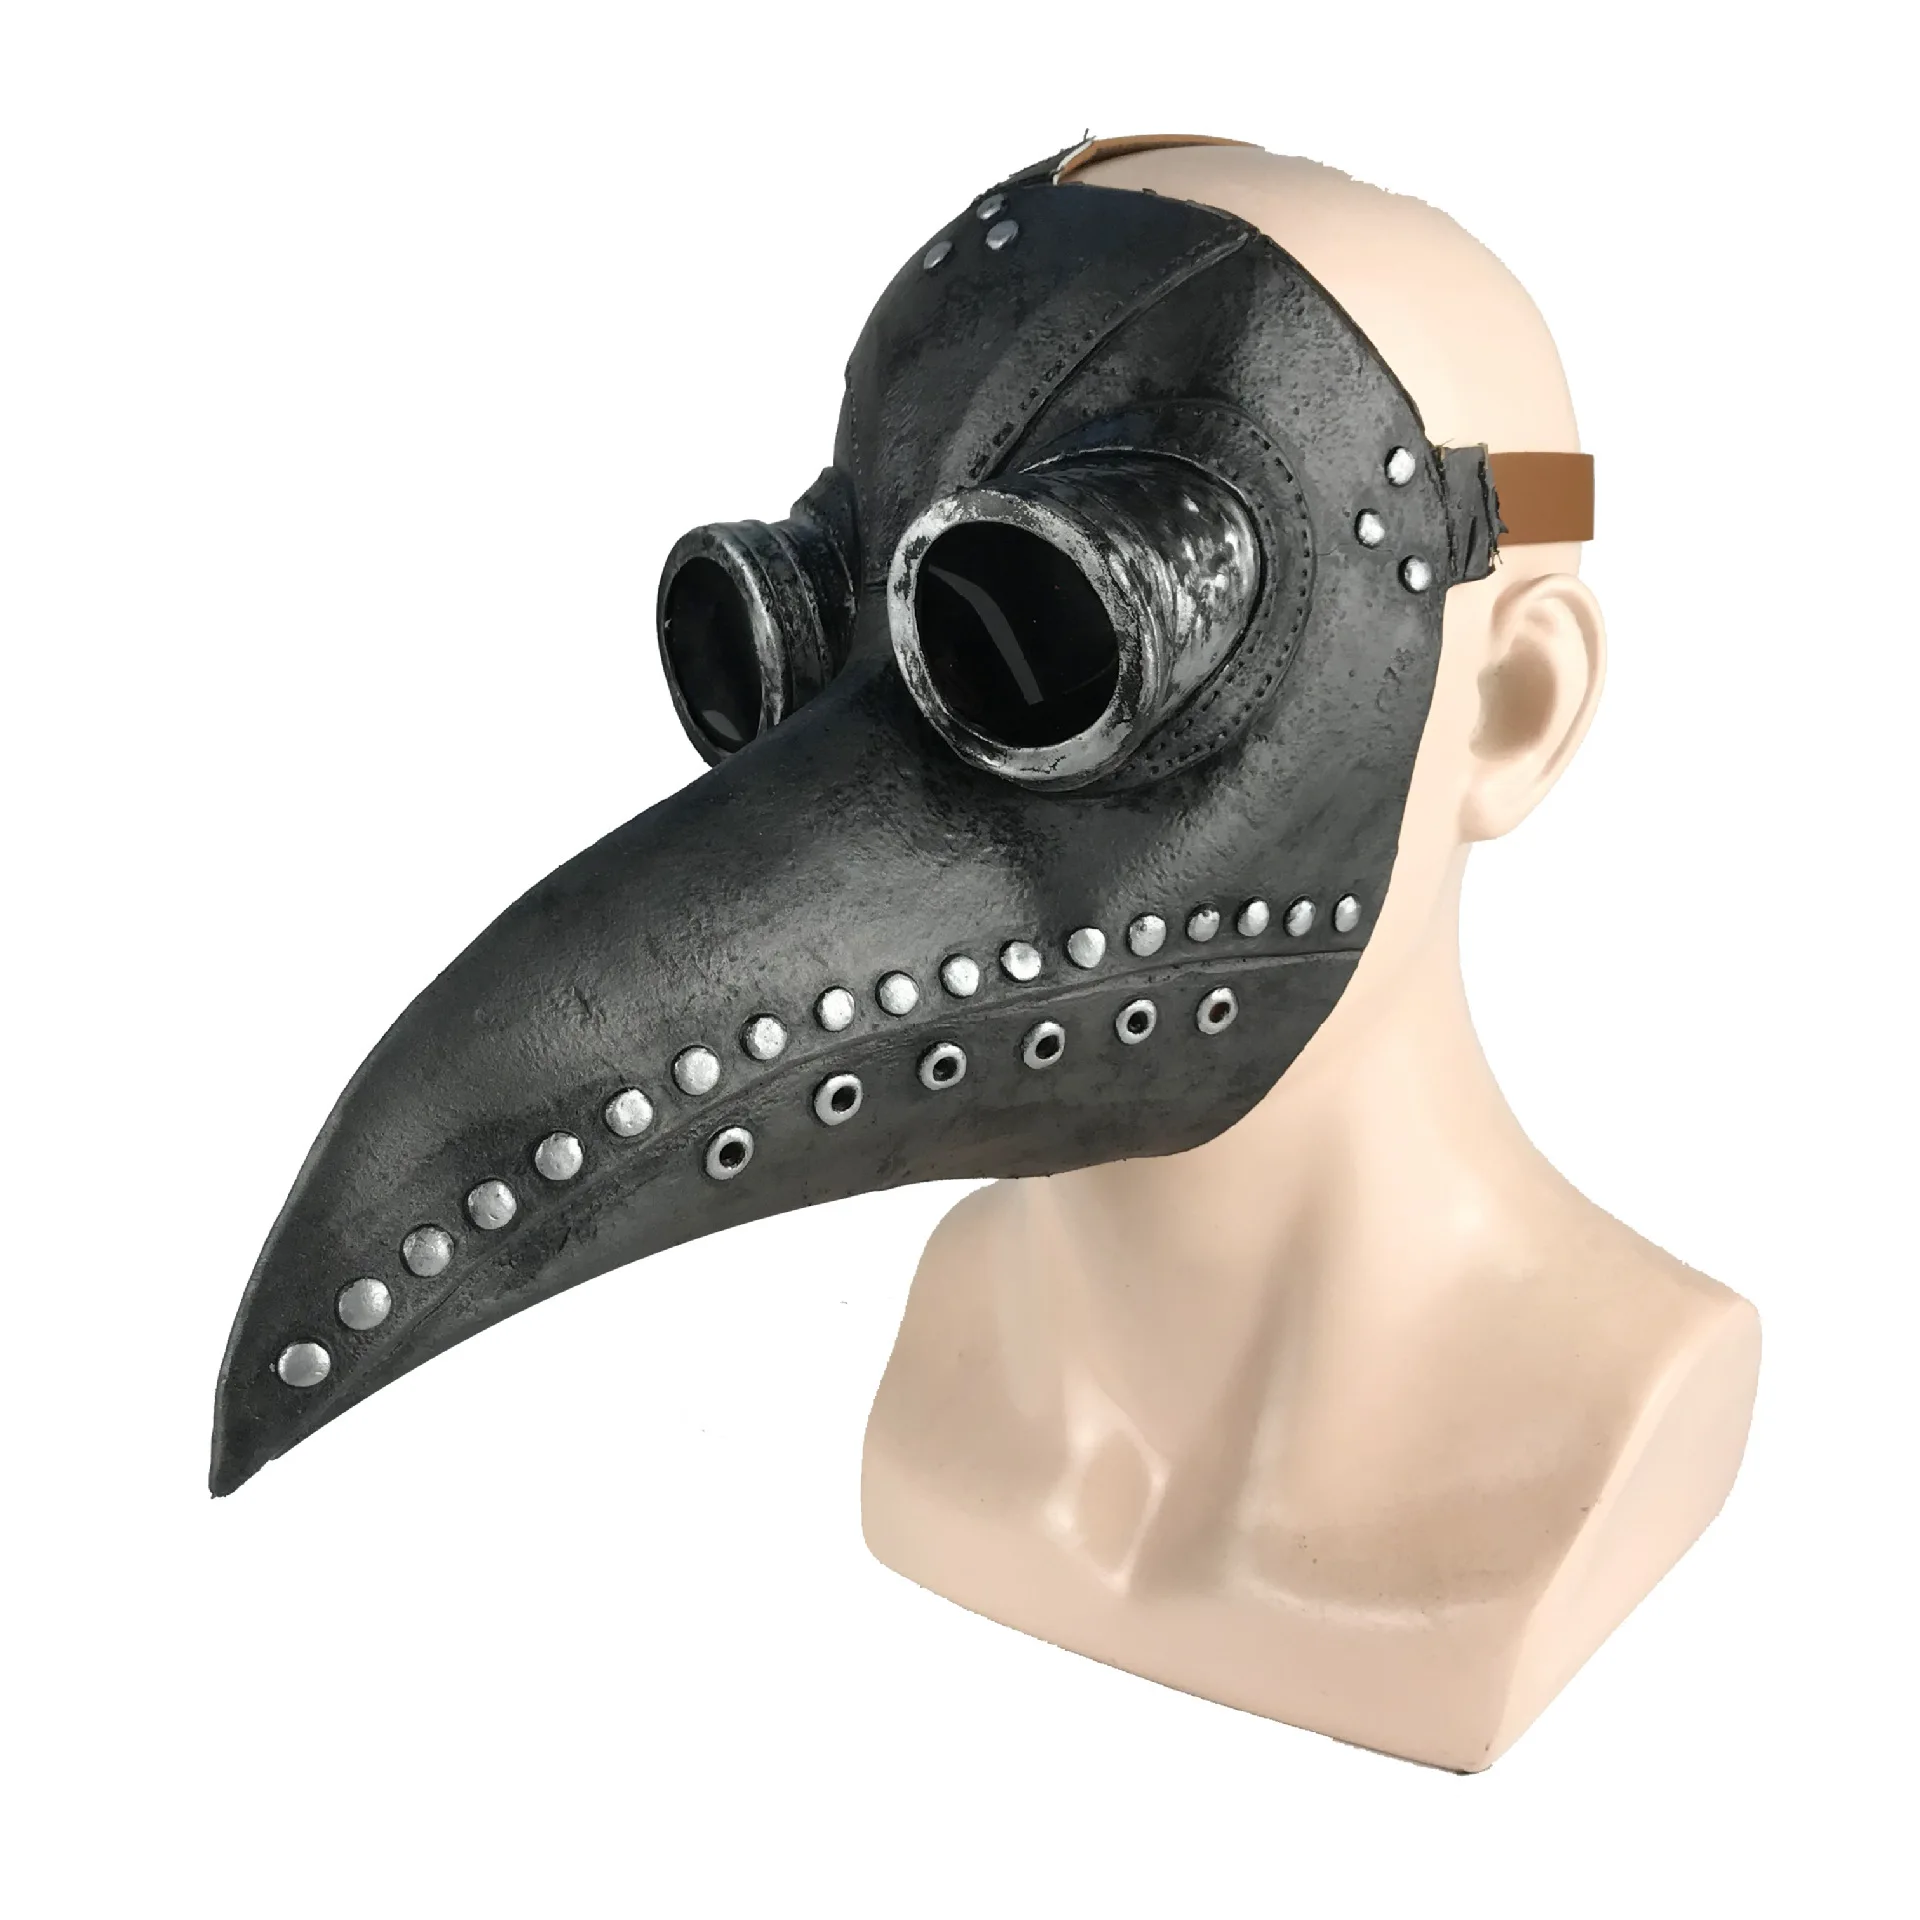 Brown WIOR Plague Doctor Mask Long Nose Bird Beak Bird Mask Halloween Medieval Steampunk Cosplay Party Props 